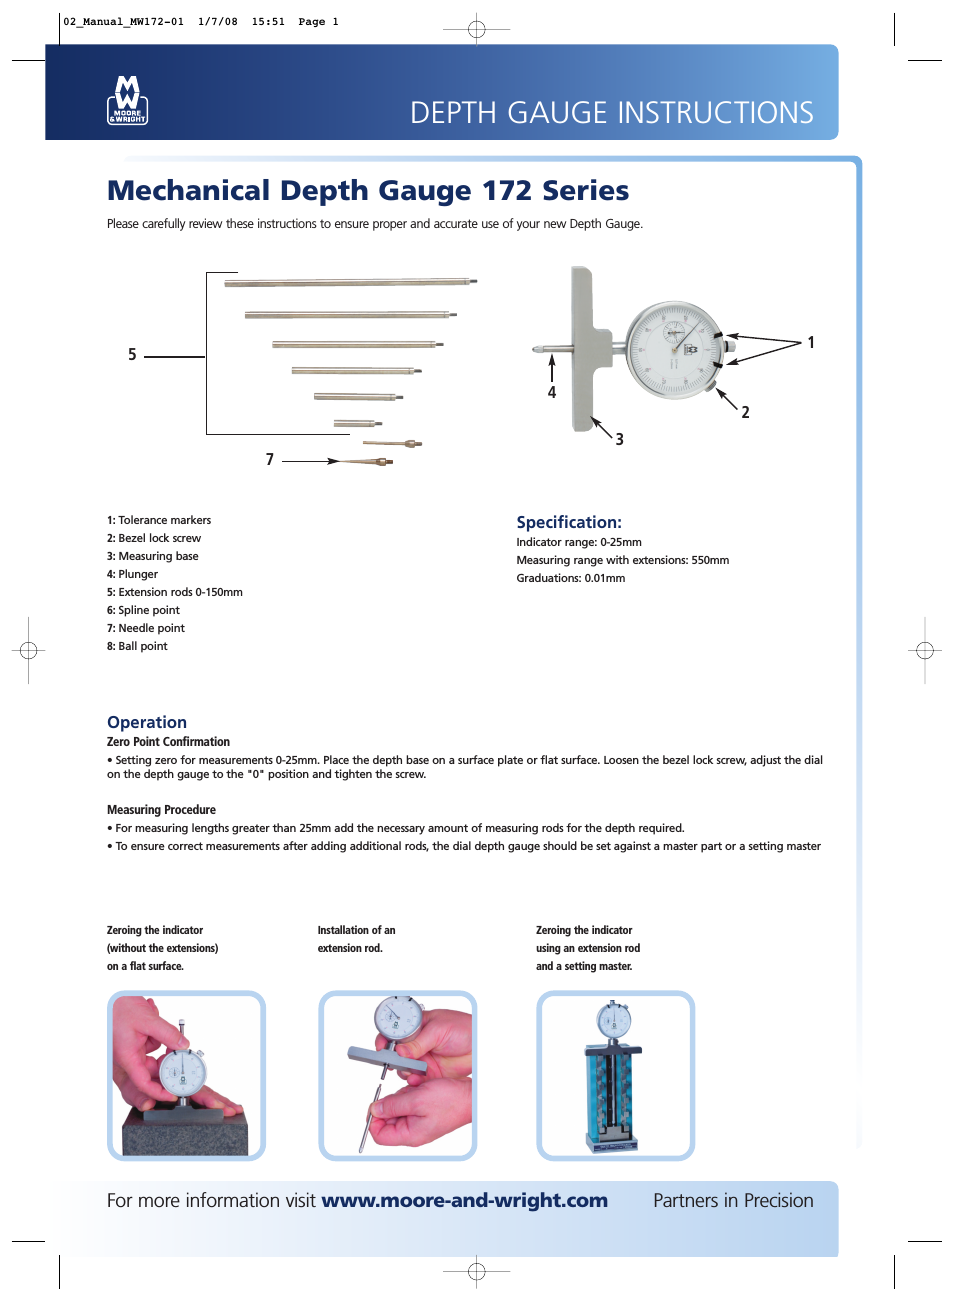 M&W Mechanical Depth Gauge 172 Series